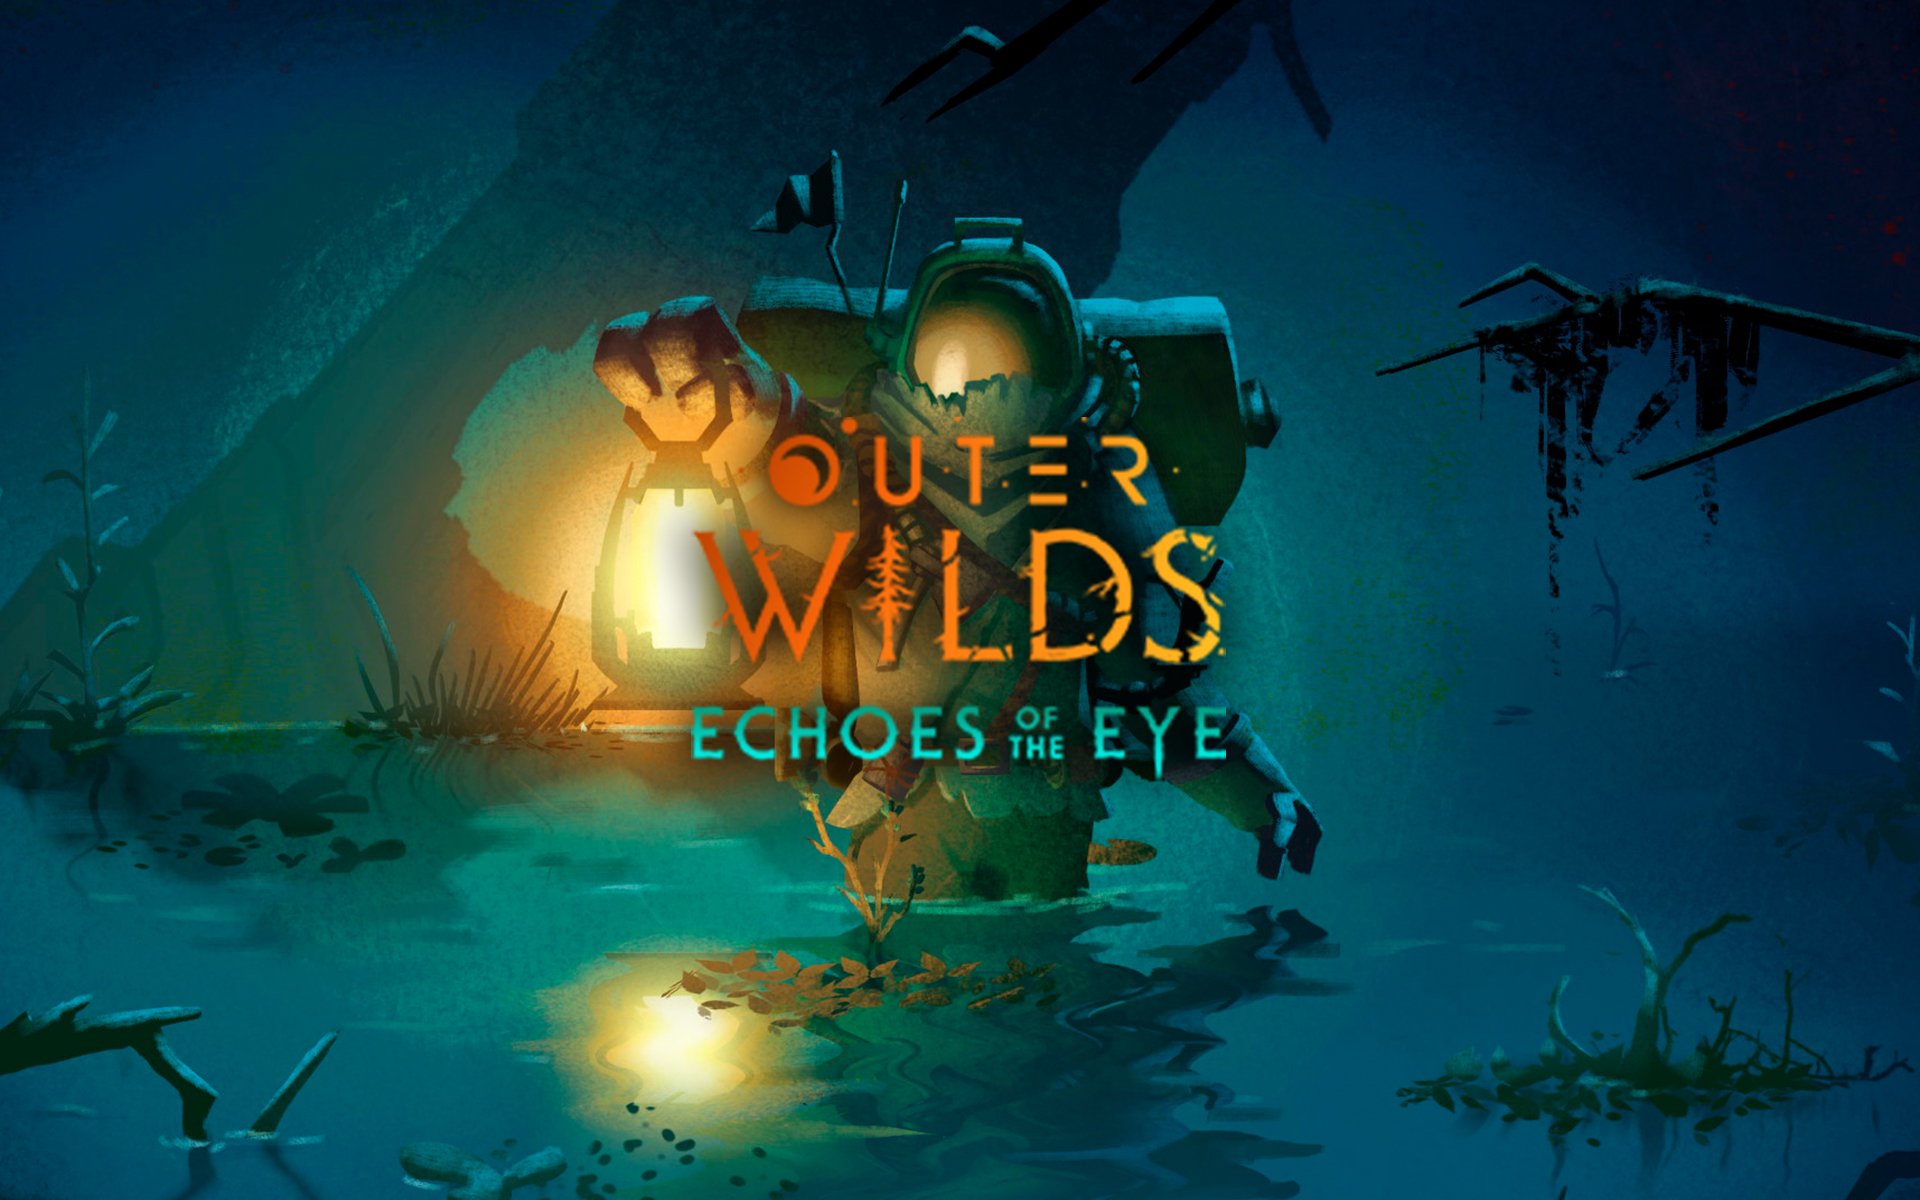 01 - Outer Wilds: Beleza e Melancolia no Espaço